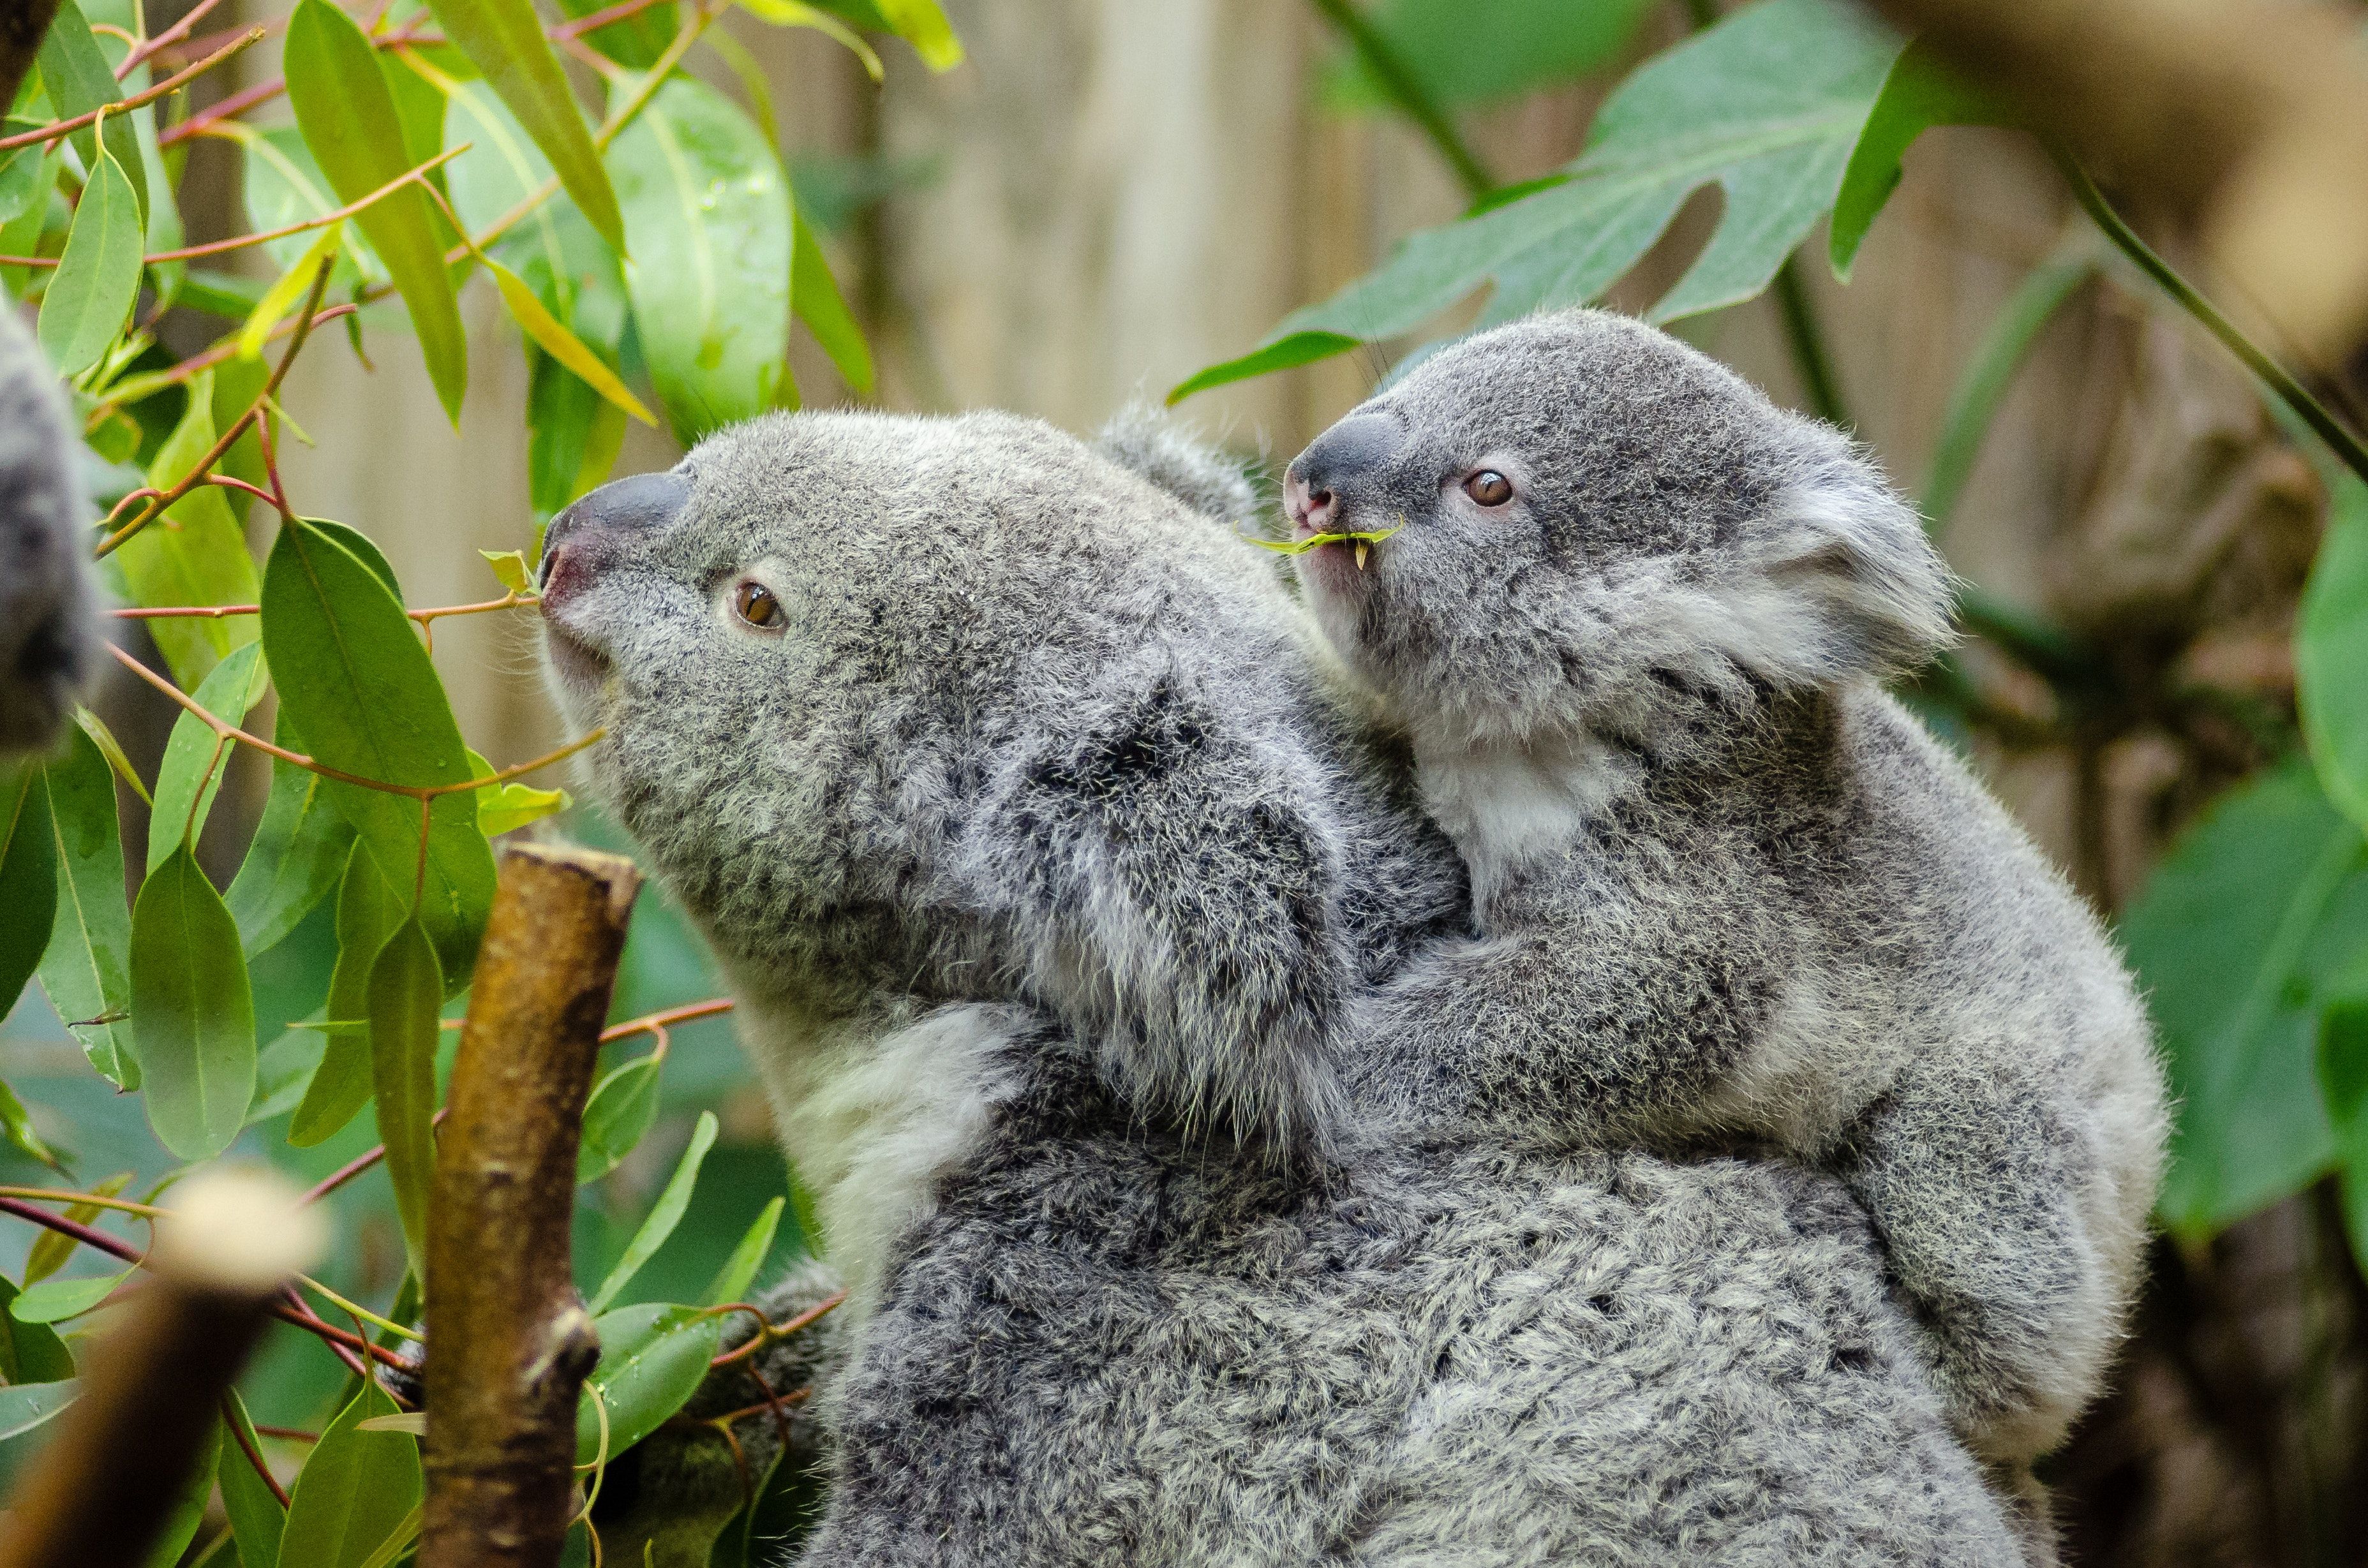 Koala Bear With Baby on Back · Free